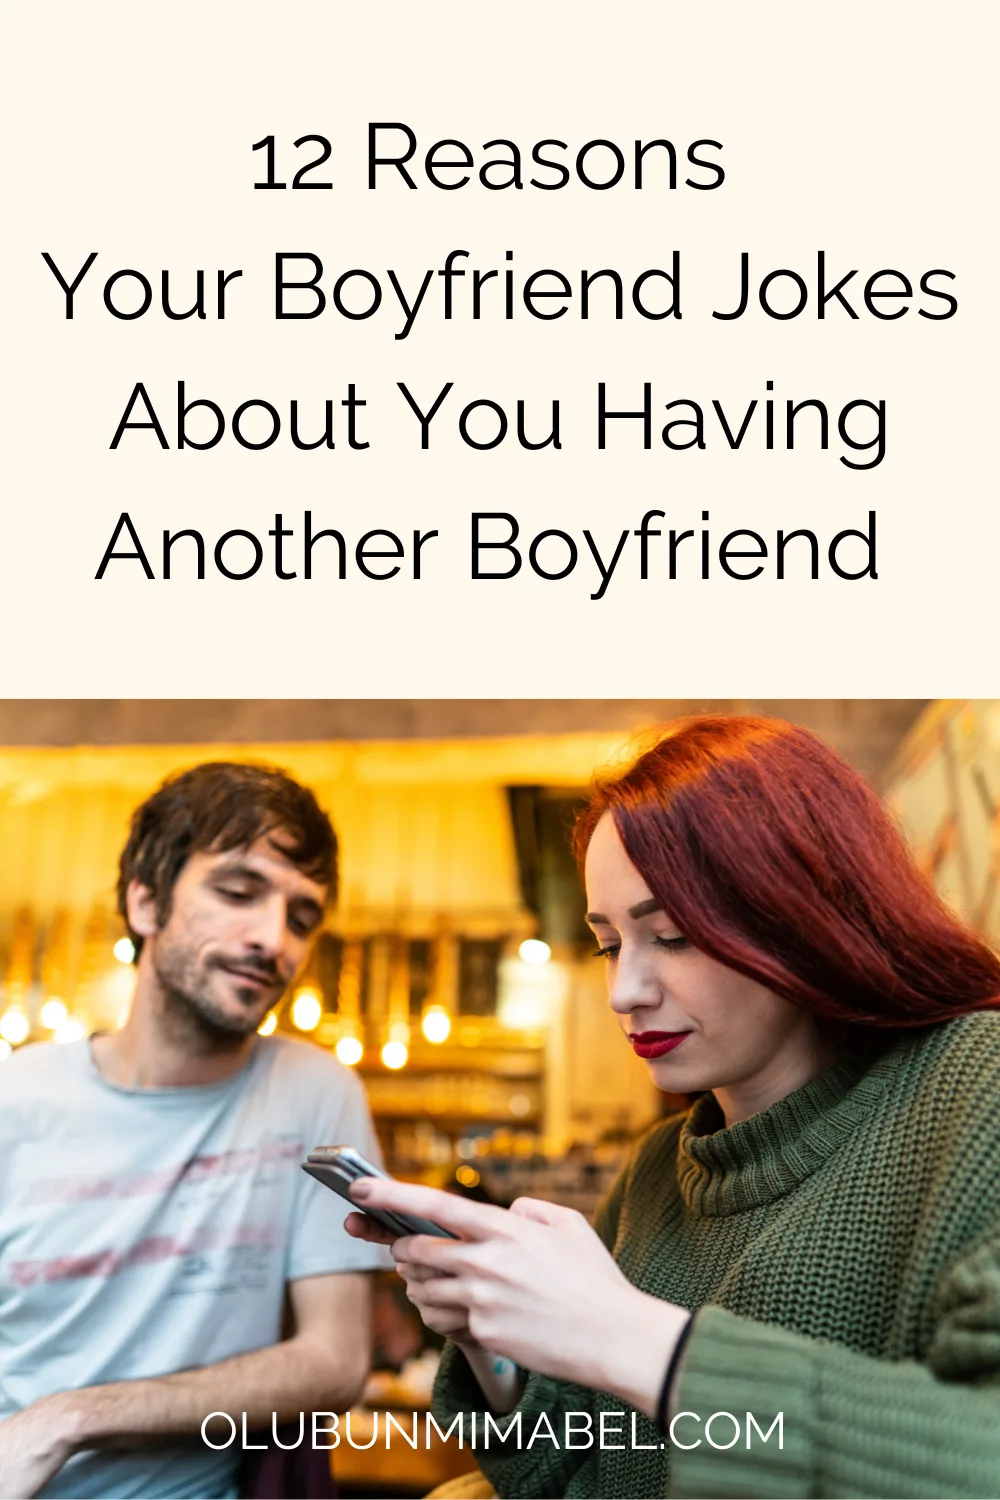 Why Does My Boyfriend Joke About Me Having Another Boyfriend?